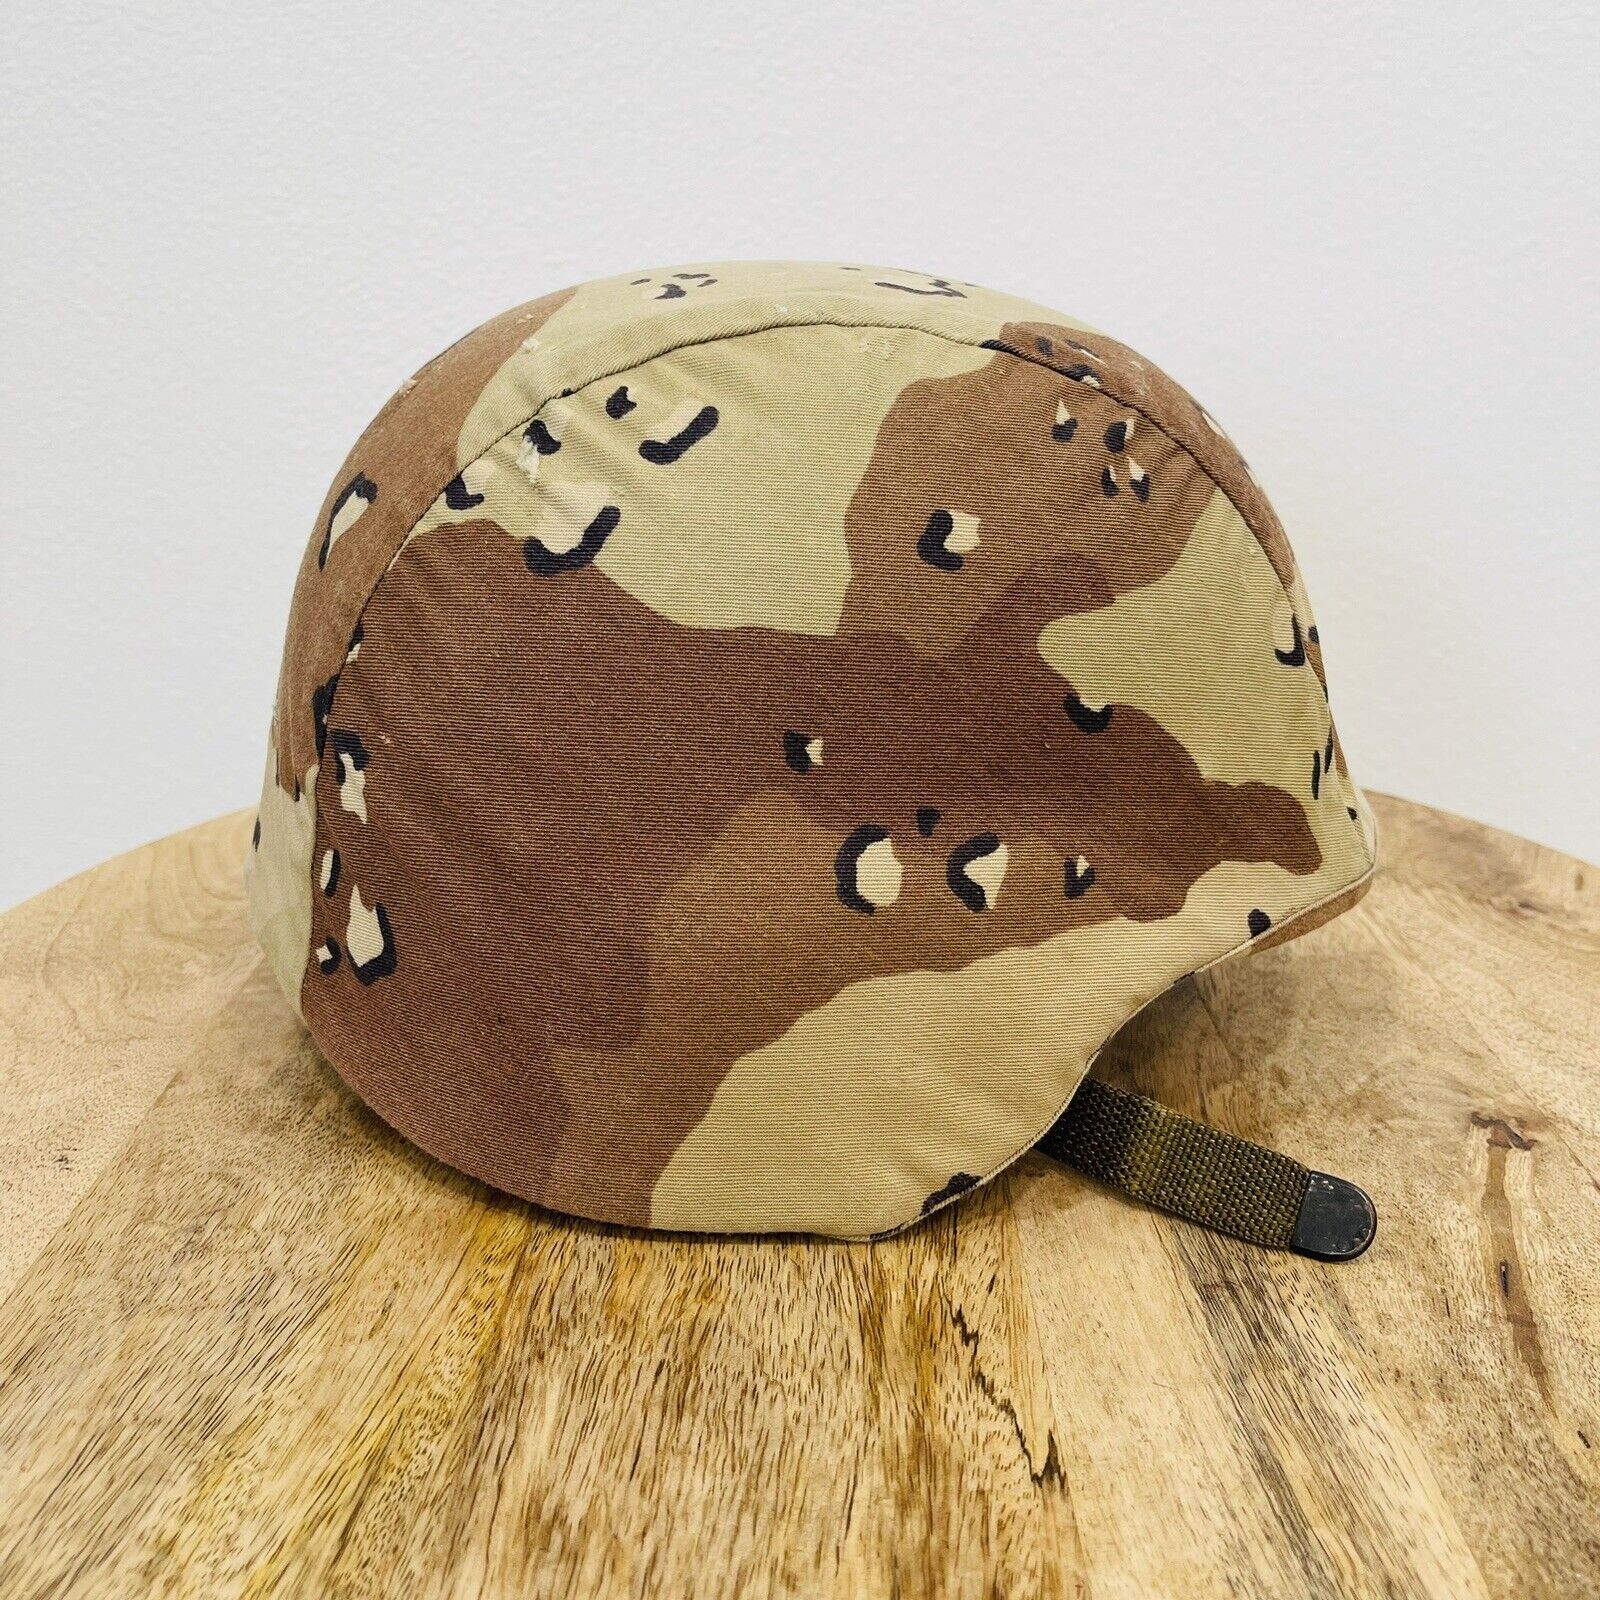 US Army  M-4 Helmet Size  XL   1984 w/ Chocolate Chip Desert Camo Cover